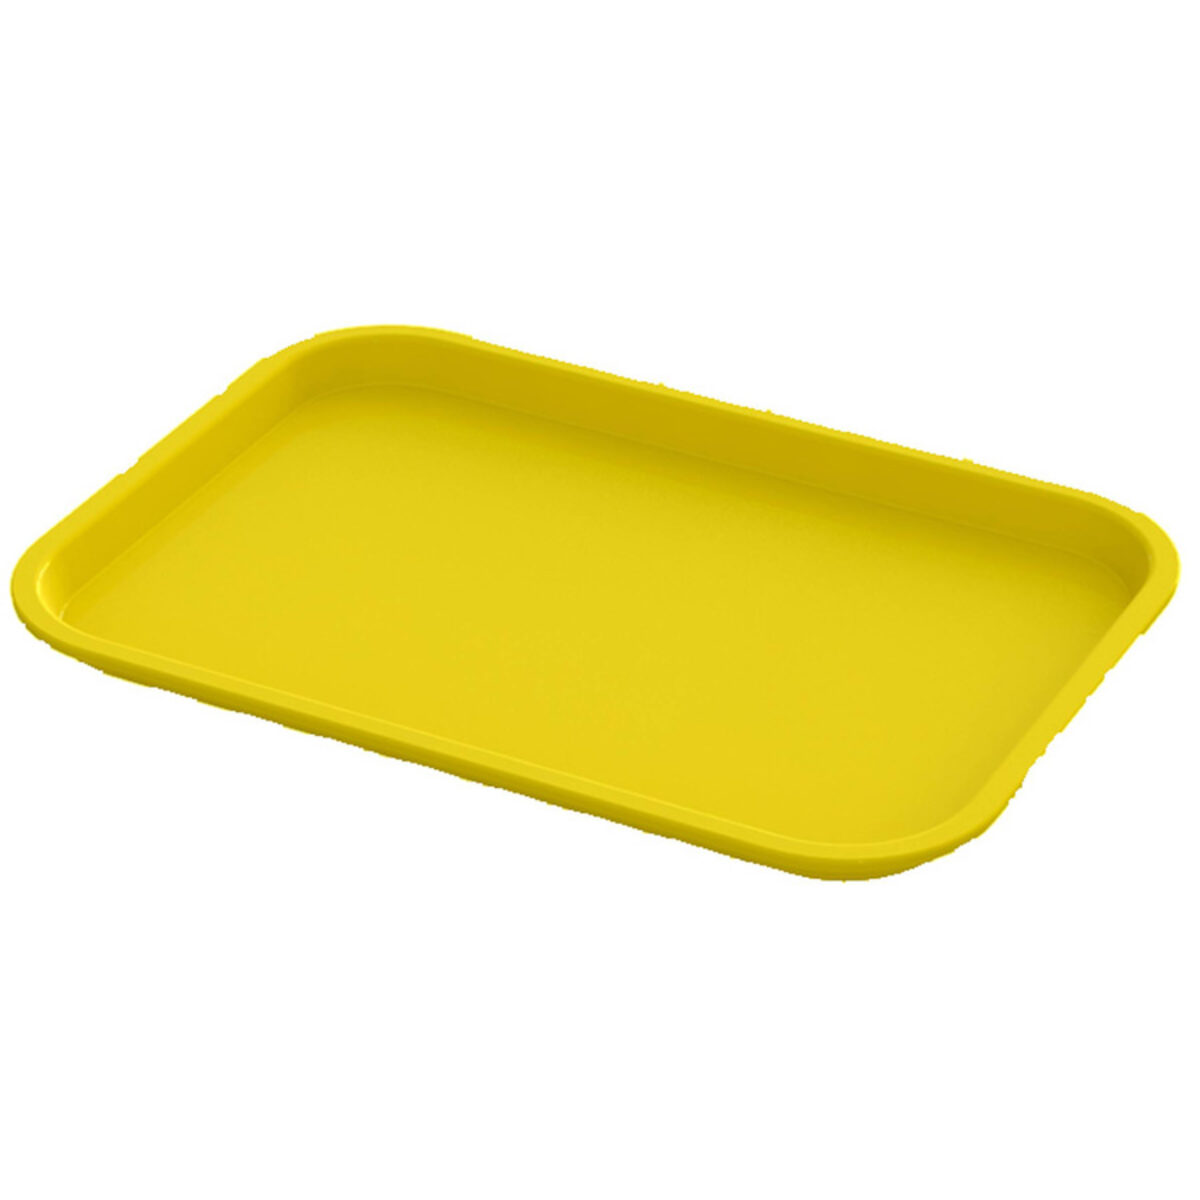 https://doyleshamrock.com/main/wp-content/uploads/schema-and-structured-data-for-wp/yellow-plastic-serving-trays-10-x-14-inch-1200x1200.jpg